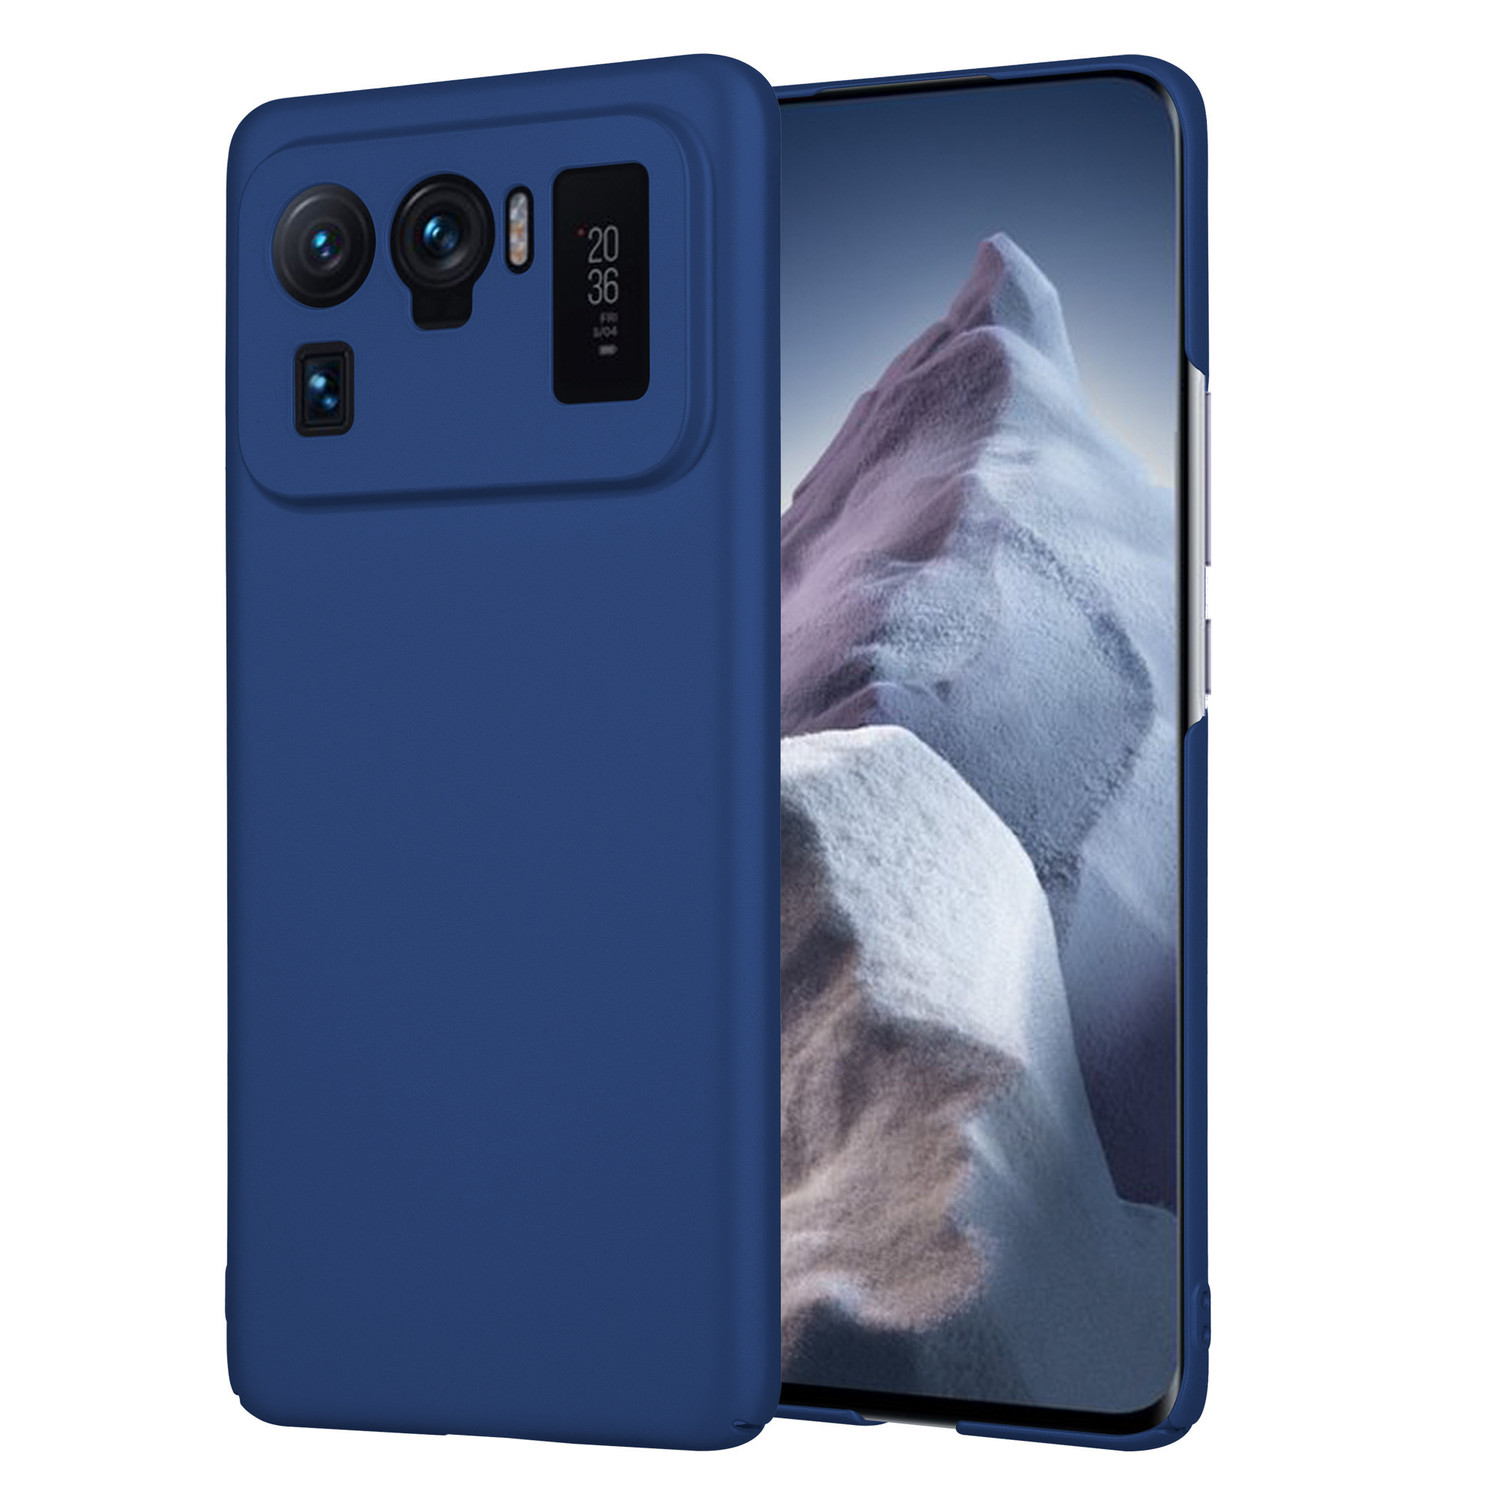 Funda ultrafina Xiaomi Mi 11 Ultra Slim (azul) 